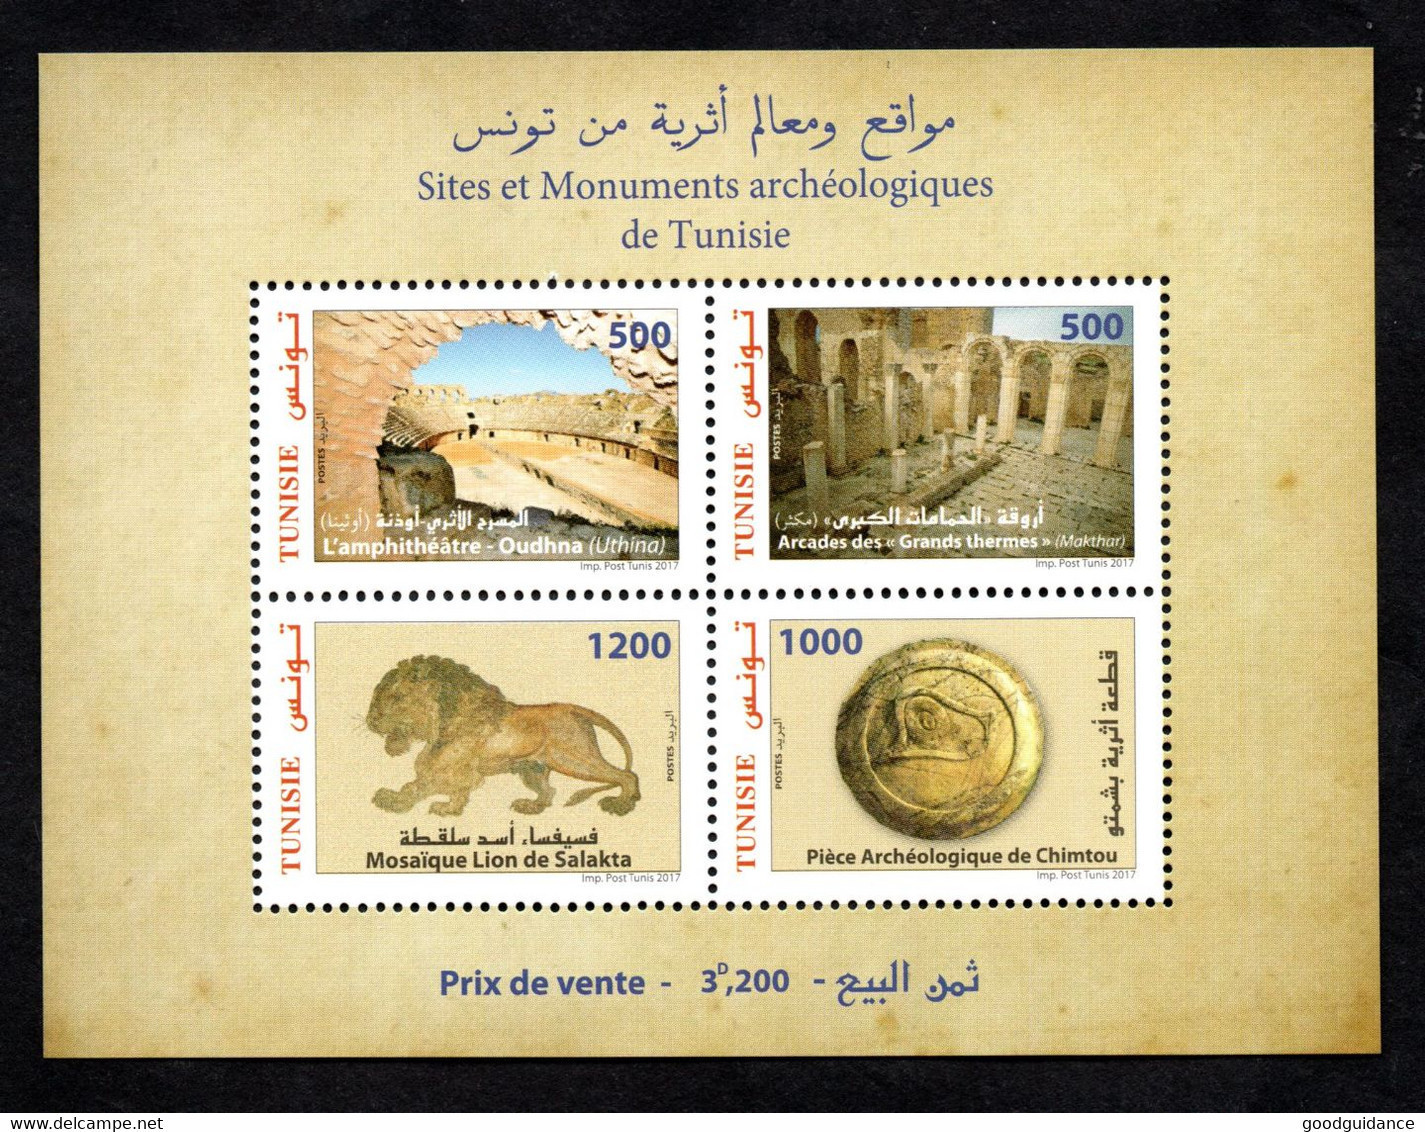 2017- Tunisia- Tunisie- Archeological Sites And Monuments- Sites Et Monuments Archéologiques- Minisheet - Bloc- MNH** - Tunisie (1956-...)